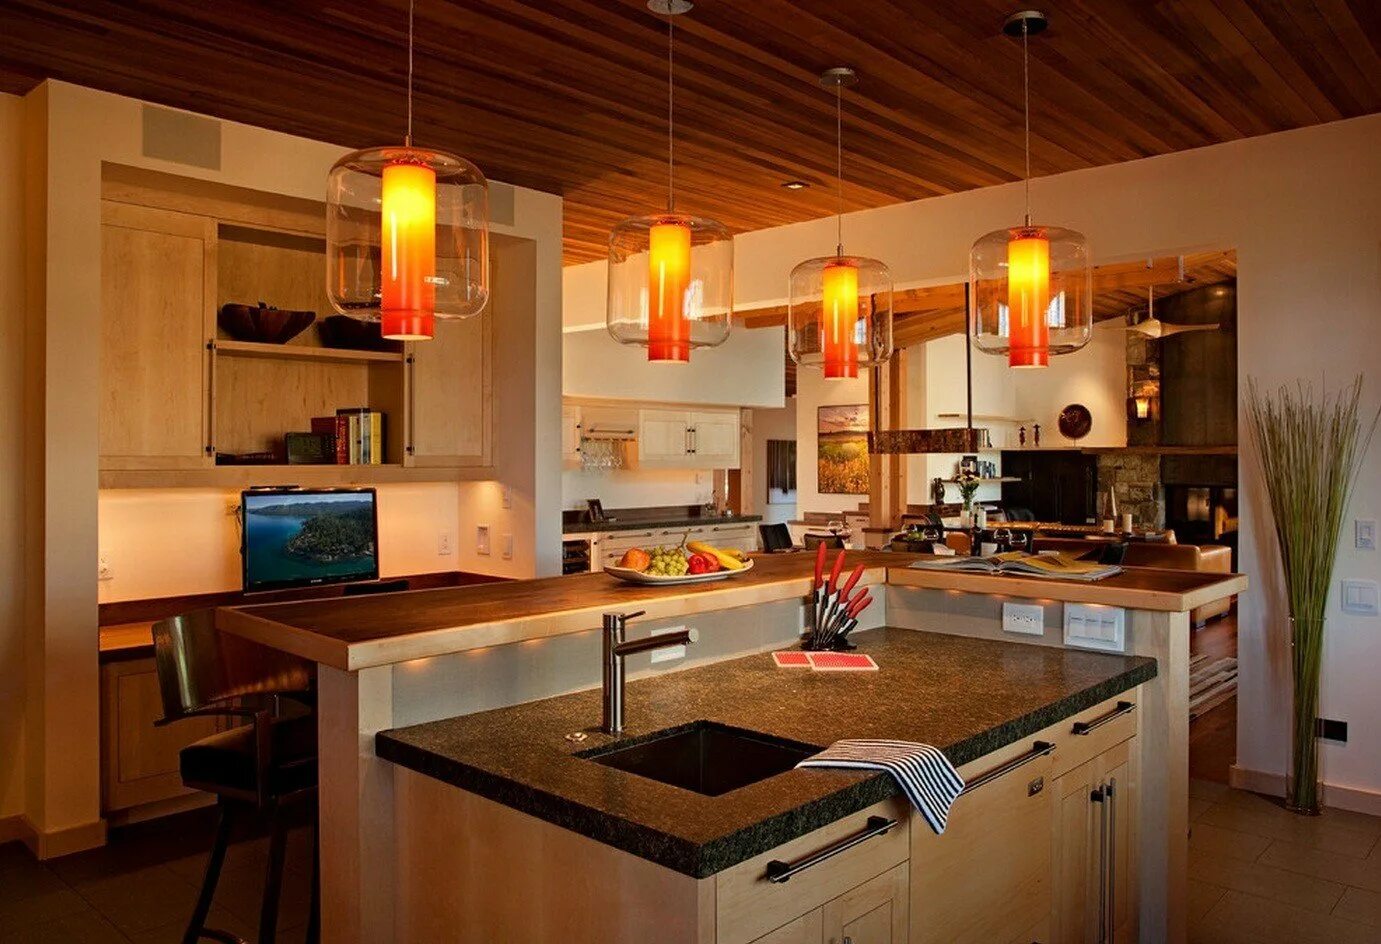 Свет на кухне. Освещение в доме. Освещение кухонного стола. Свет на кухне в доме. Освещение кухонной зоны.